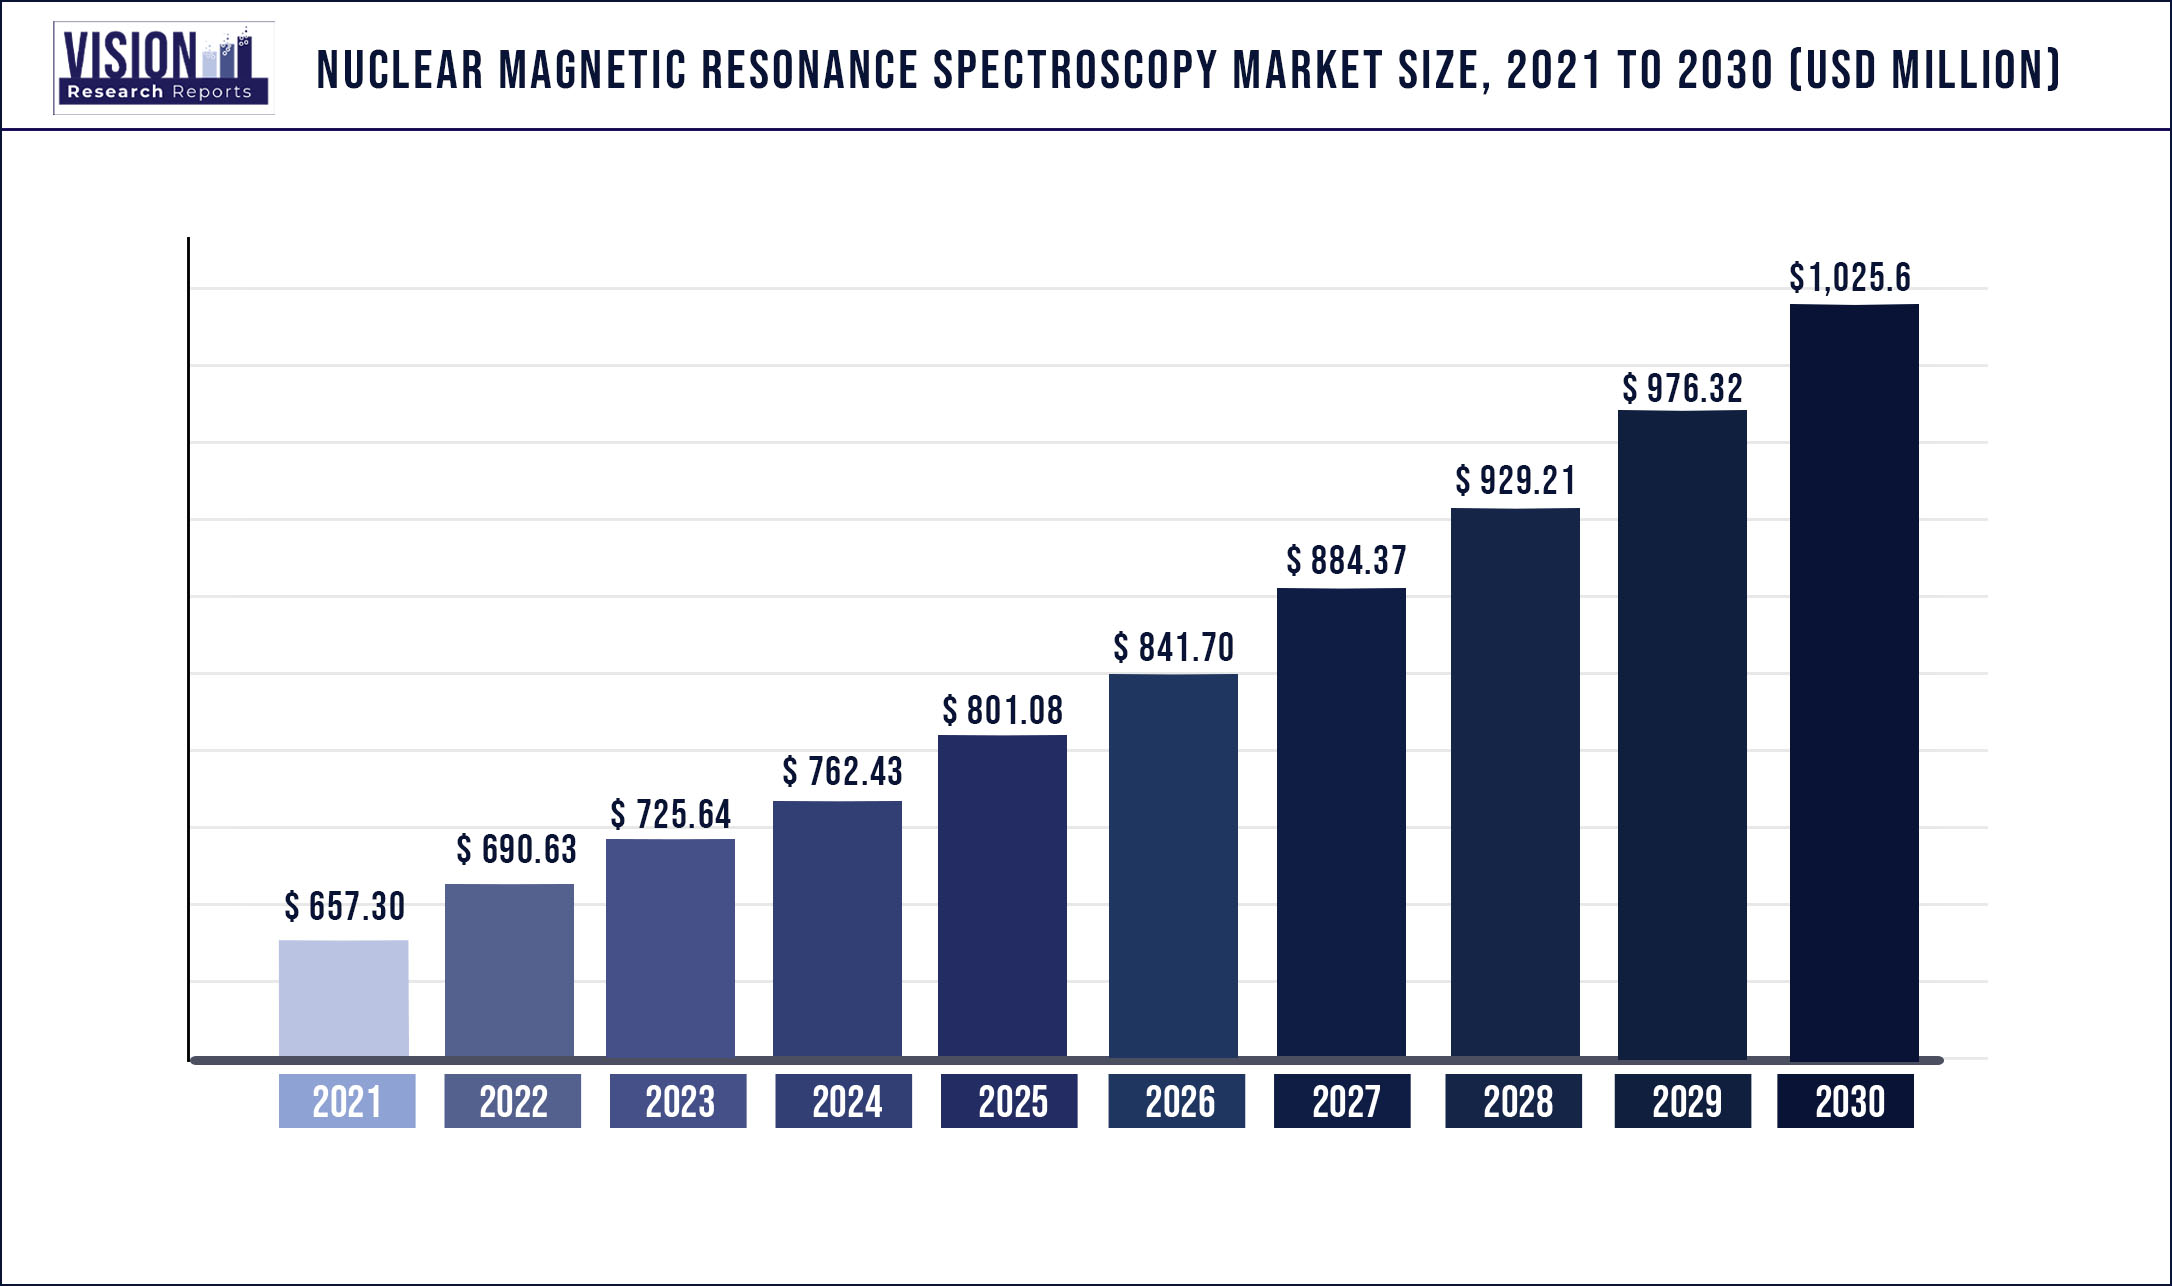 Nuclear Magnetic Resonance Spectroscopy Market Size 2021 to 2030